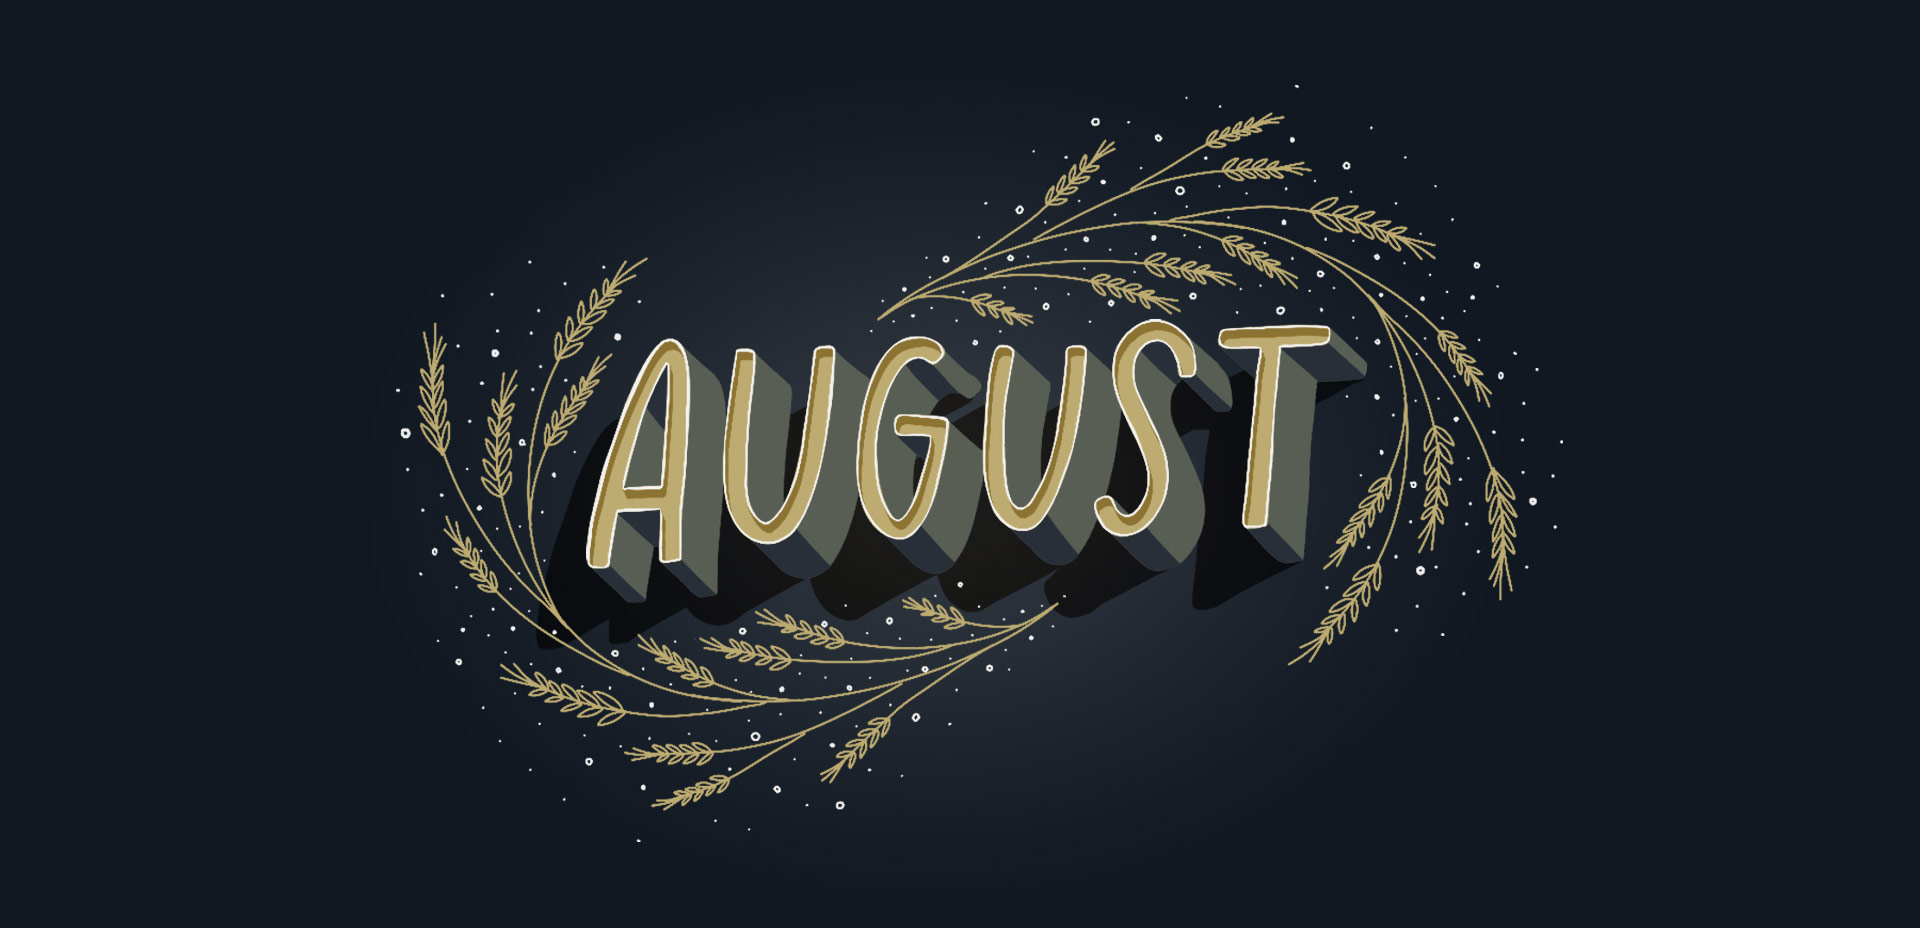 Freebie: August 2018 Desktop Wallpapers - Every-Tuesday